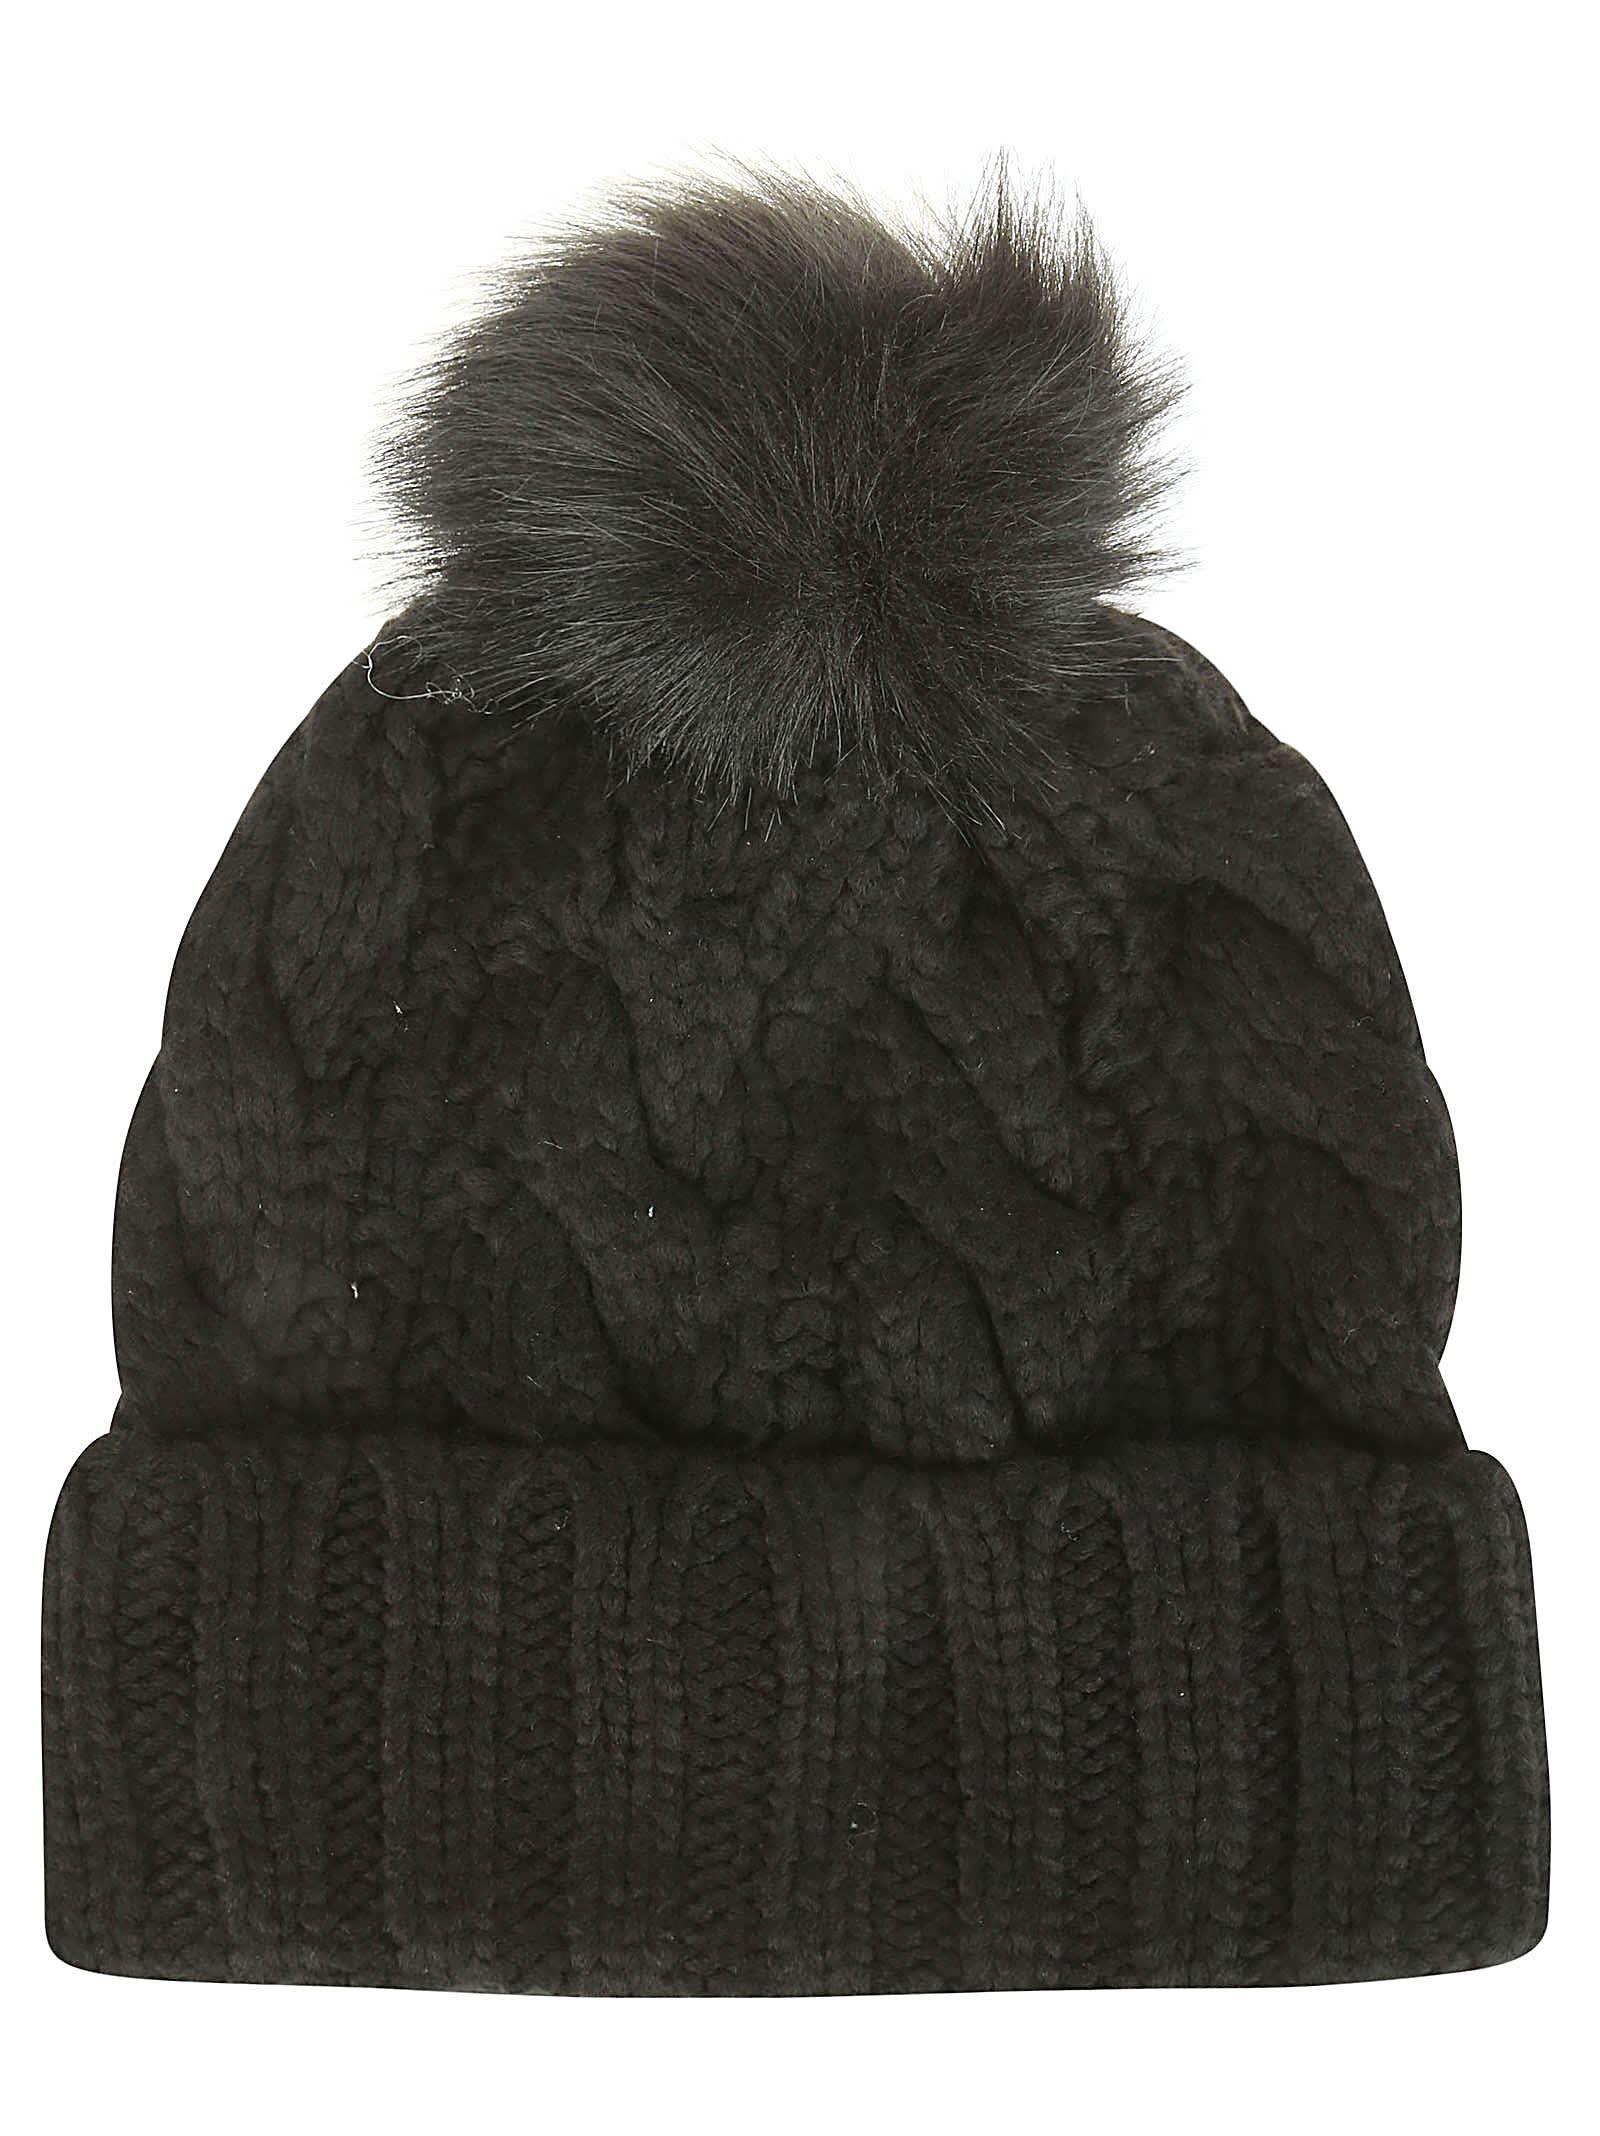 UGG W Knit Cable Hat W F Fur Pom Black | Lyst